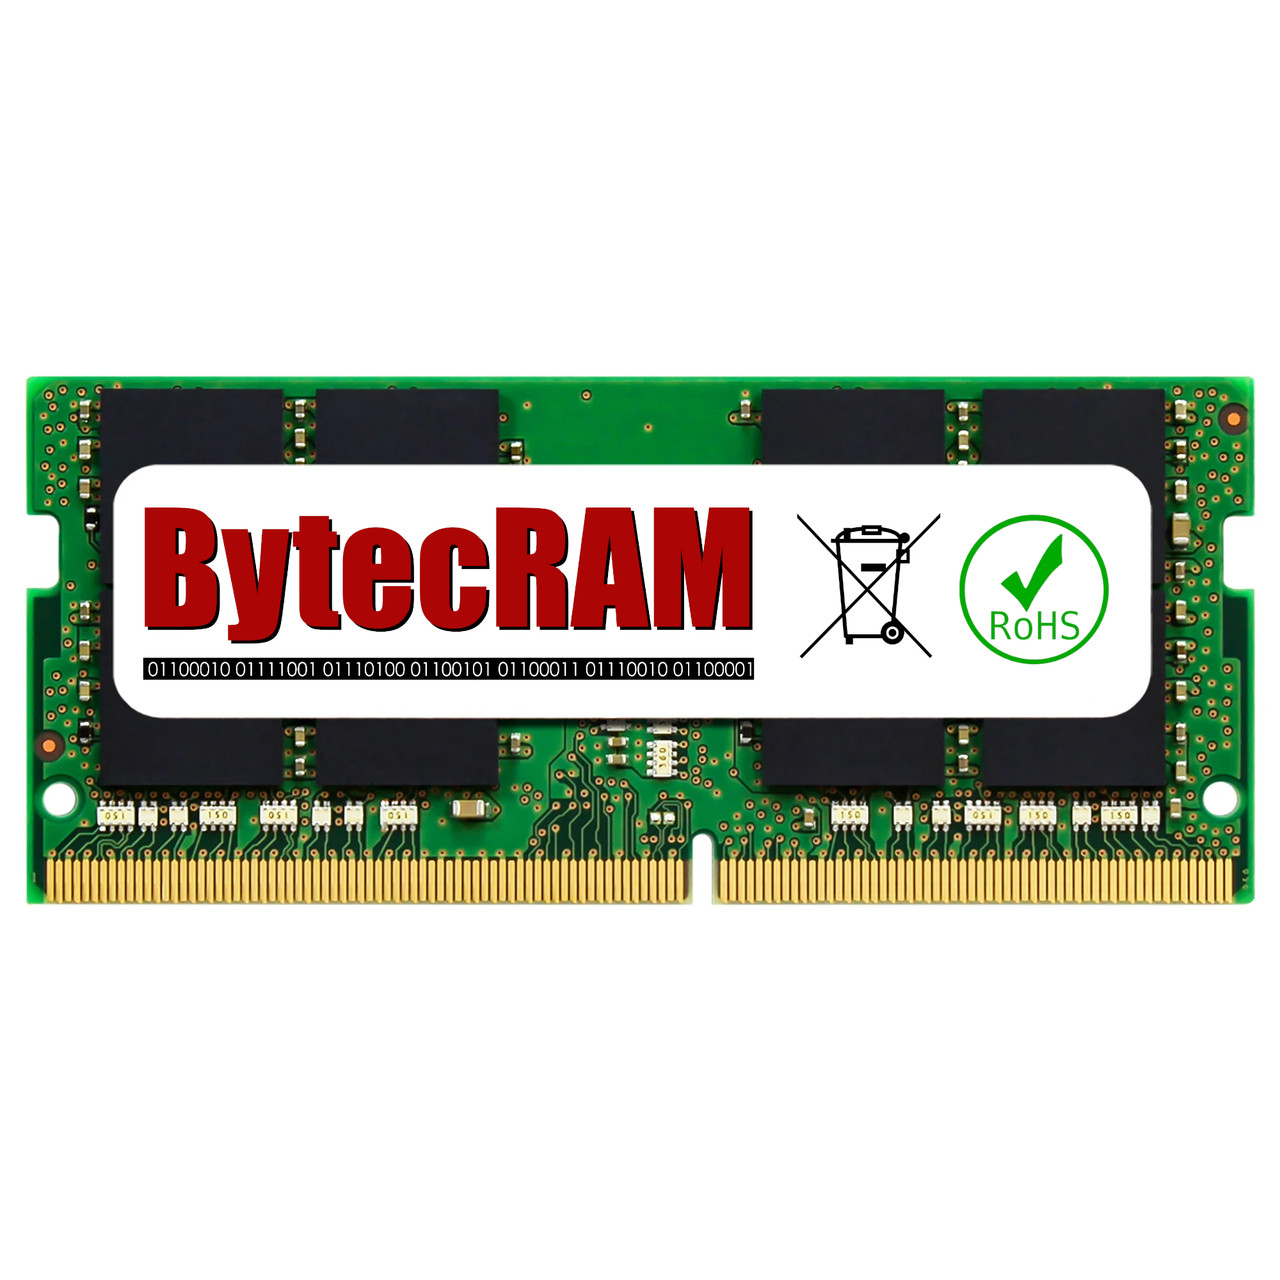 eBay*32GB 260-pin BytecRAM DDR4-3200 PC4-25600 Sodimm (2Rx8) Memory